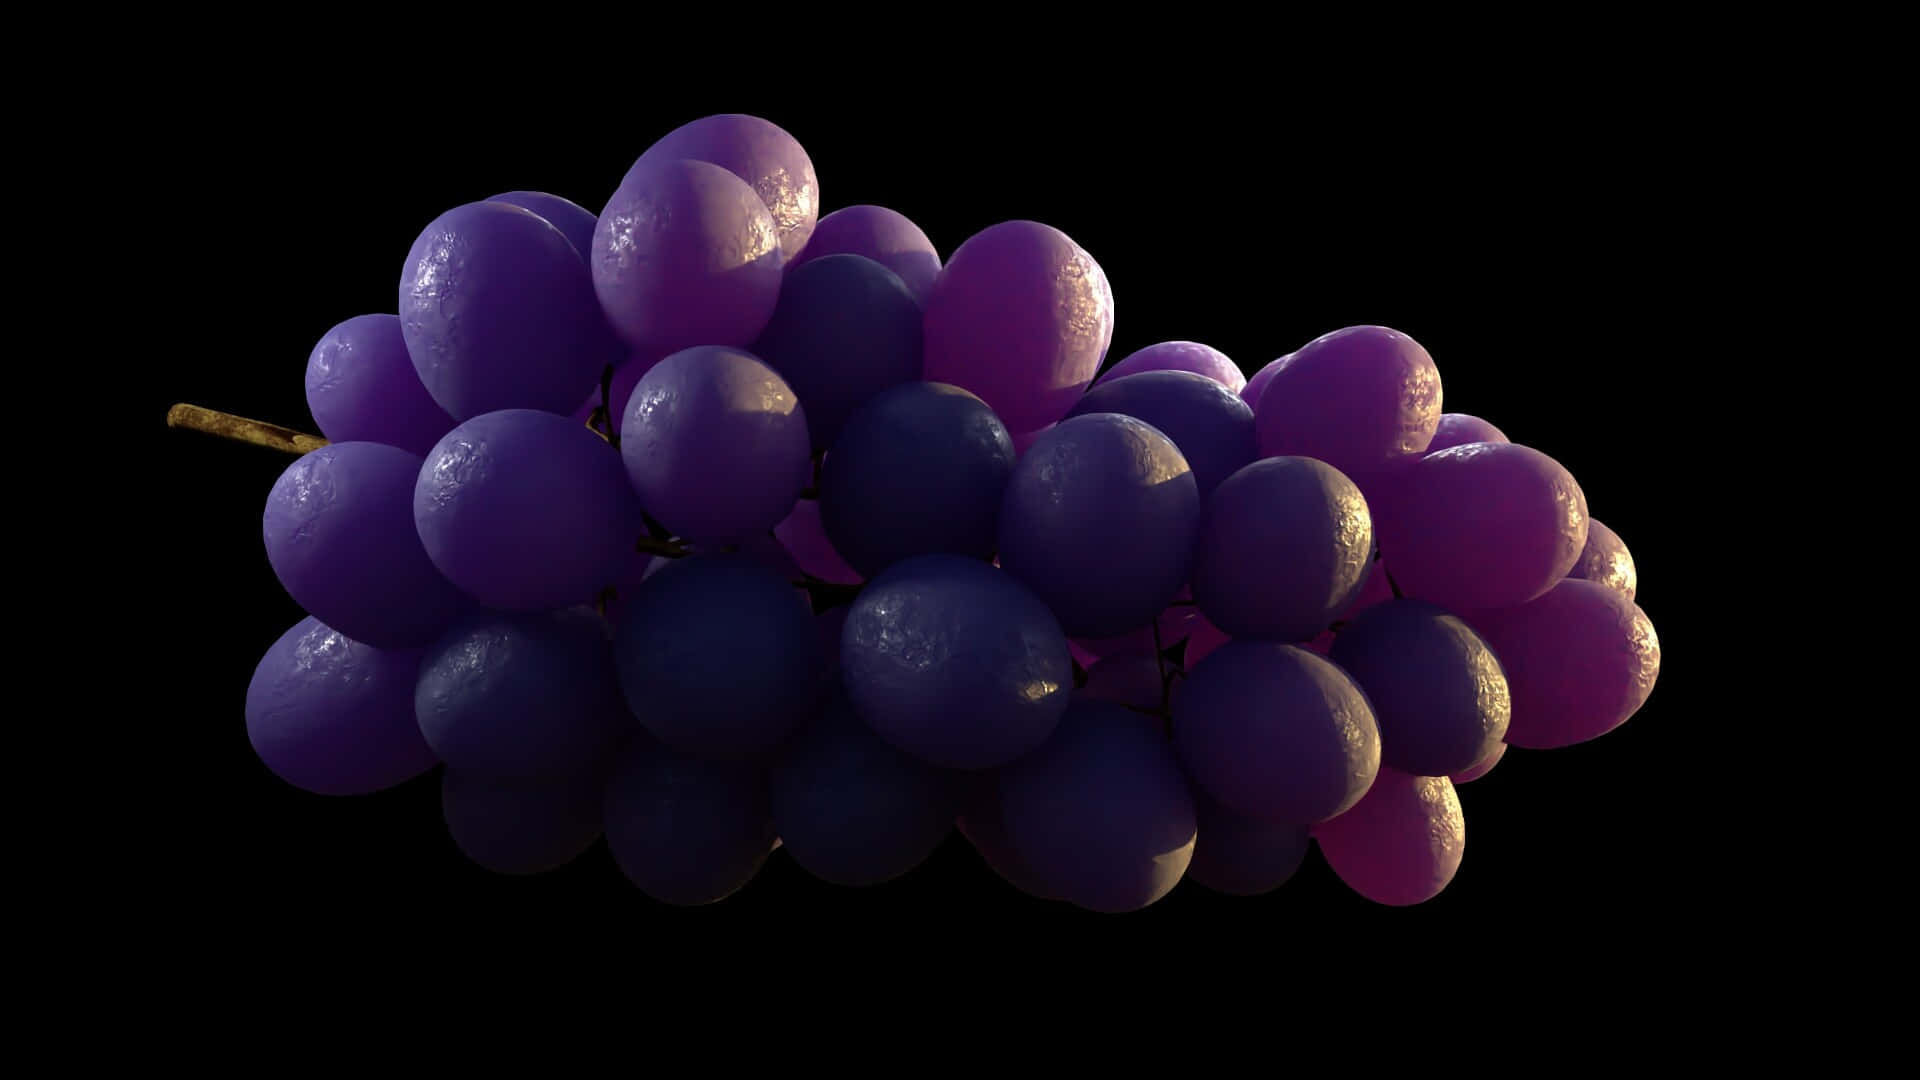 A Bunch of Delicious Purple Grapes Wallpaper